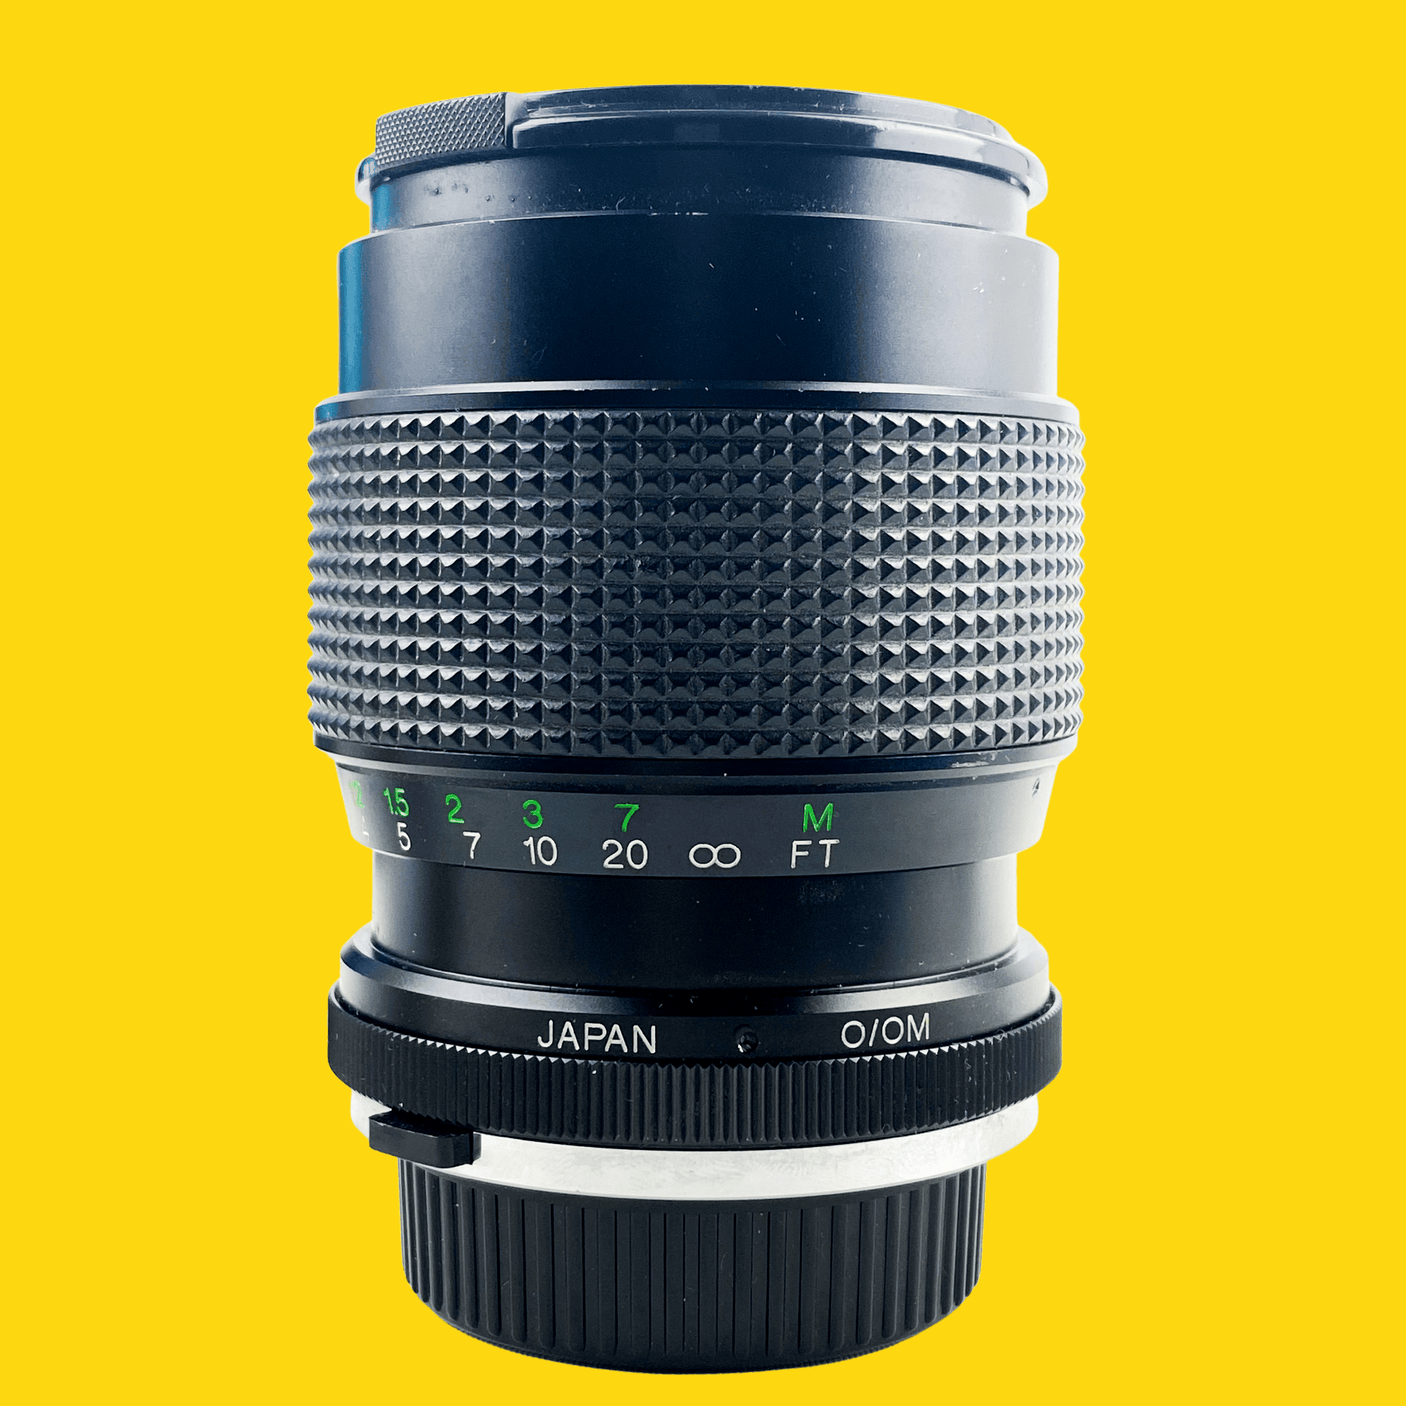 Vivitar Macro 35mm f/3.8 Multi Coated Camera Lens